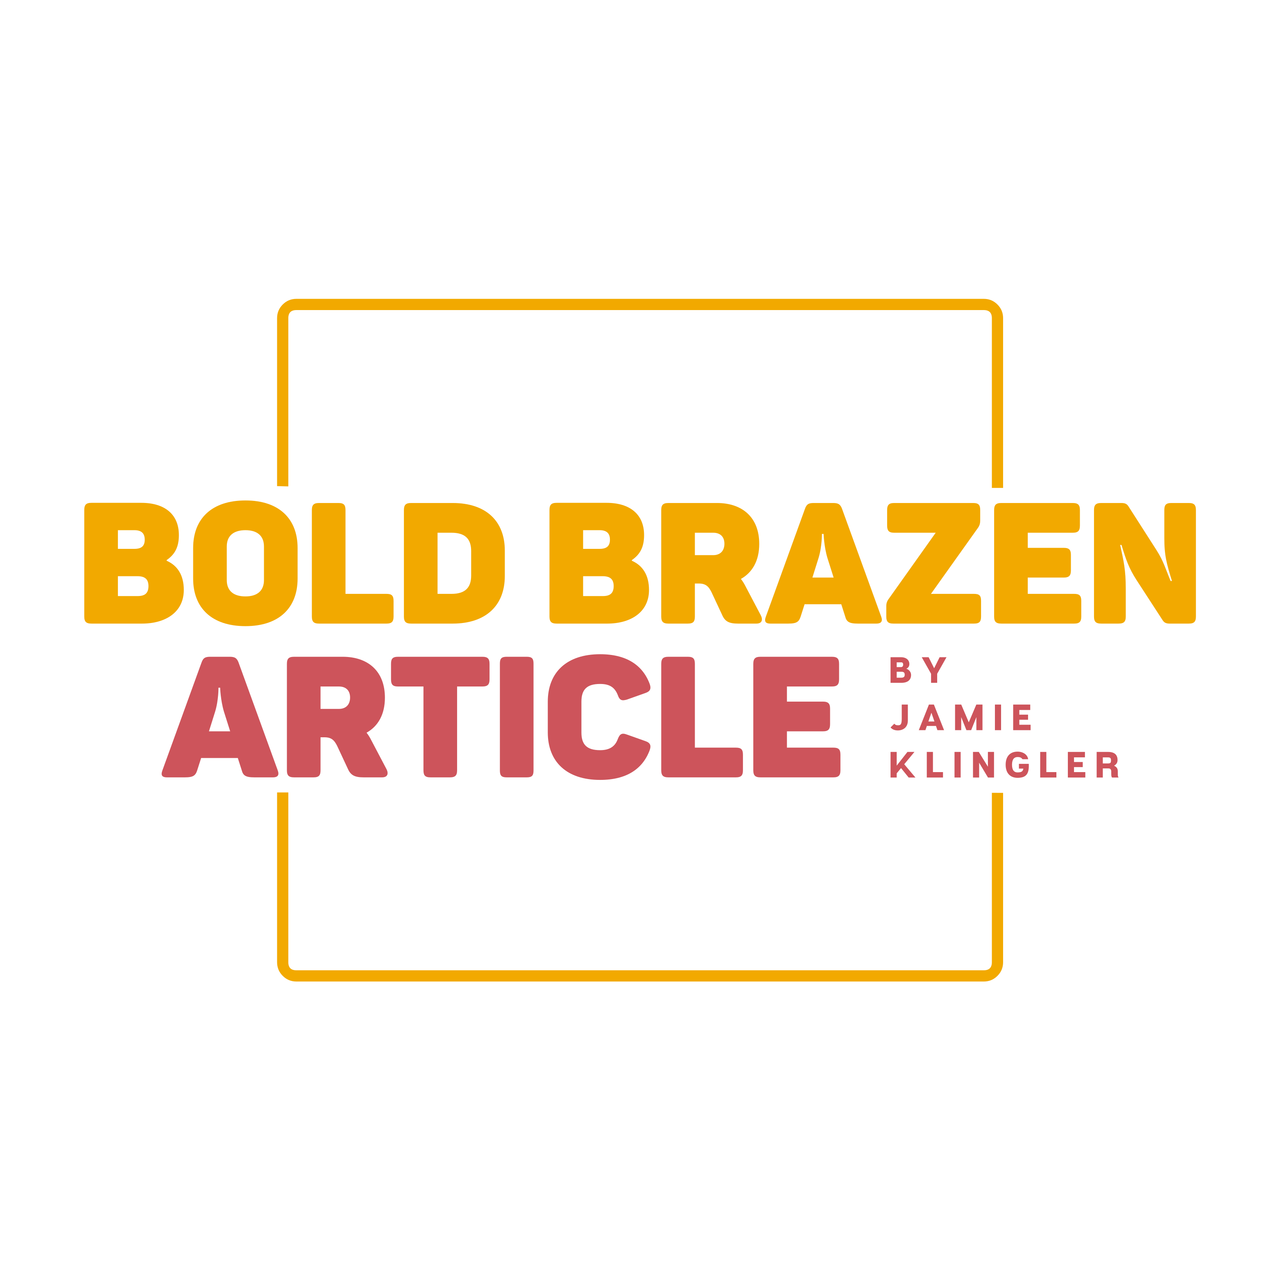 Bold Brazen Article by Jamie Klingler